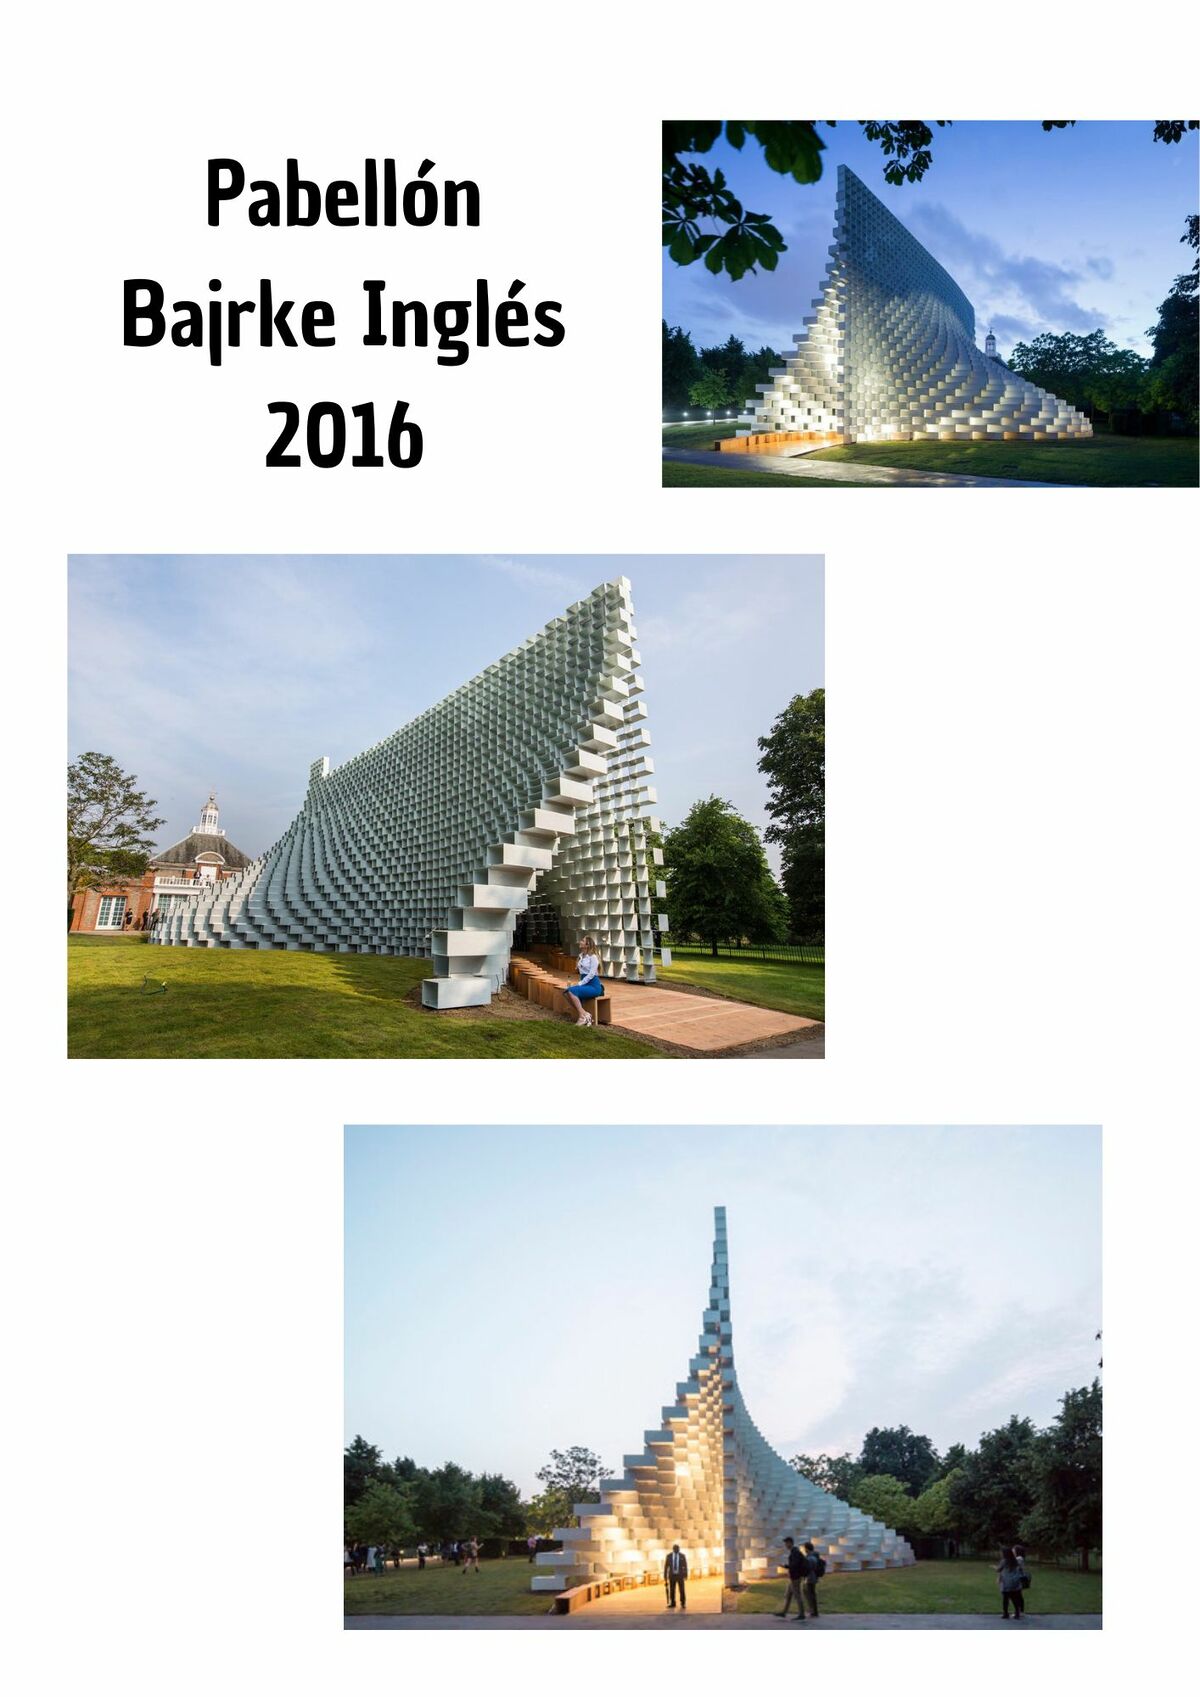 Pabellón Bajrke Inglés 2016.jpg